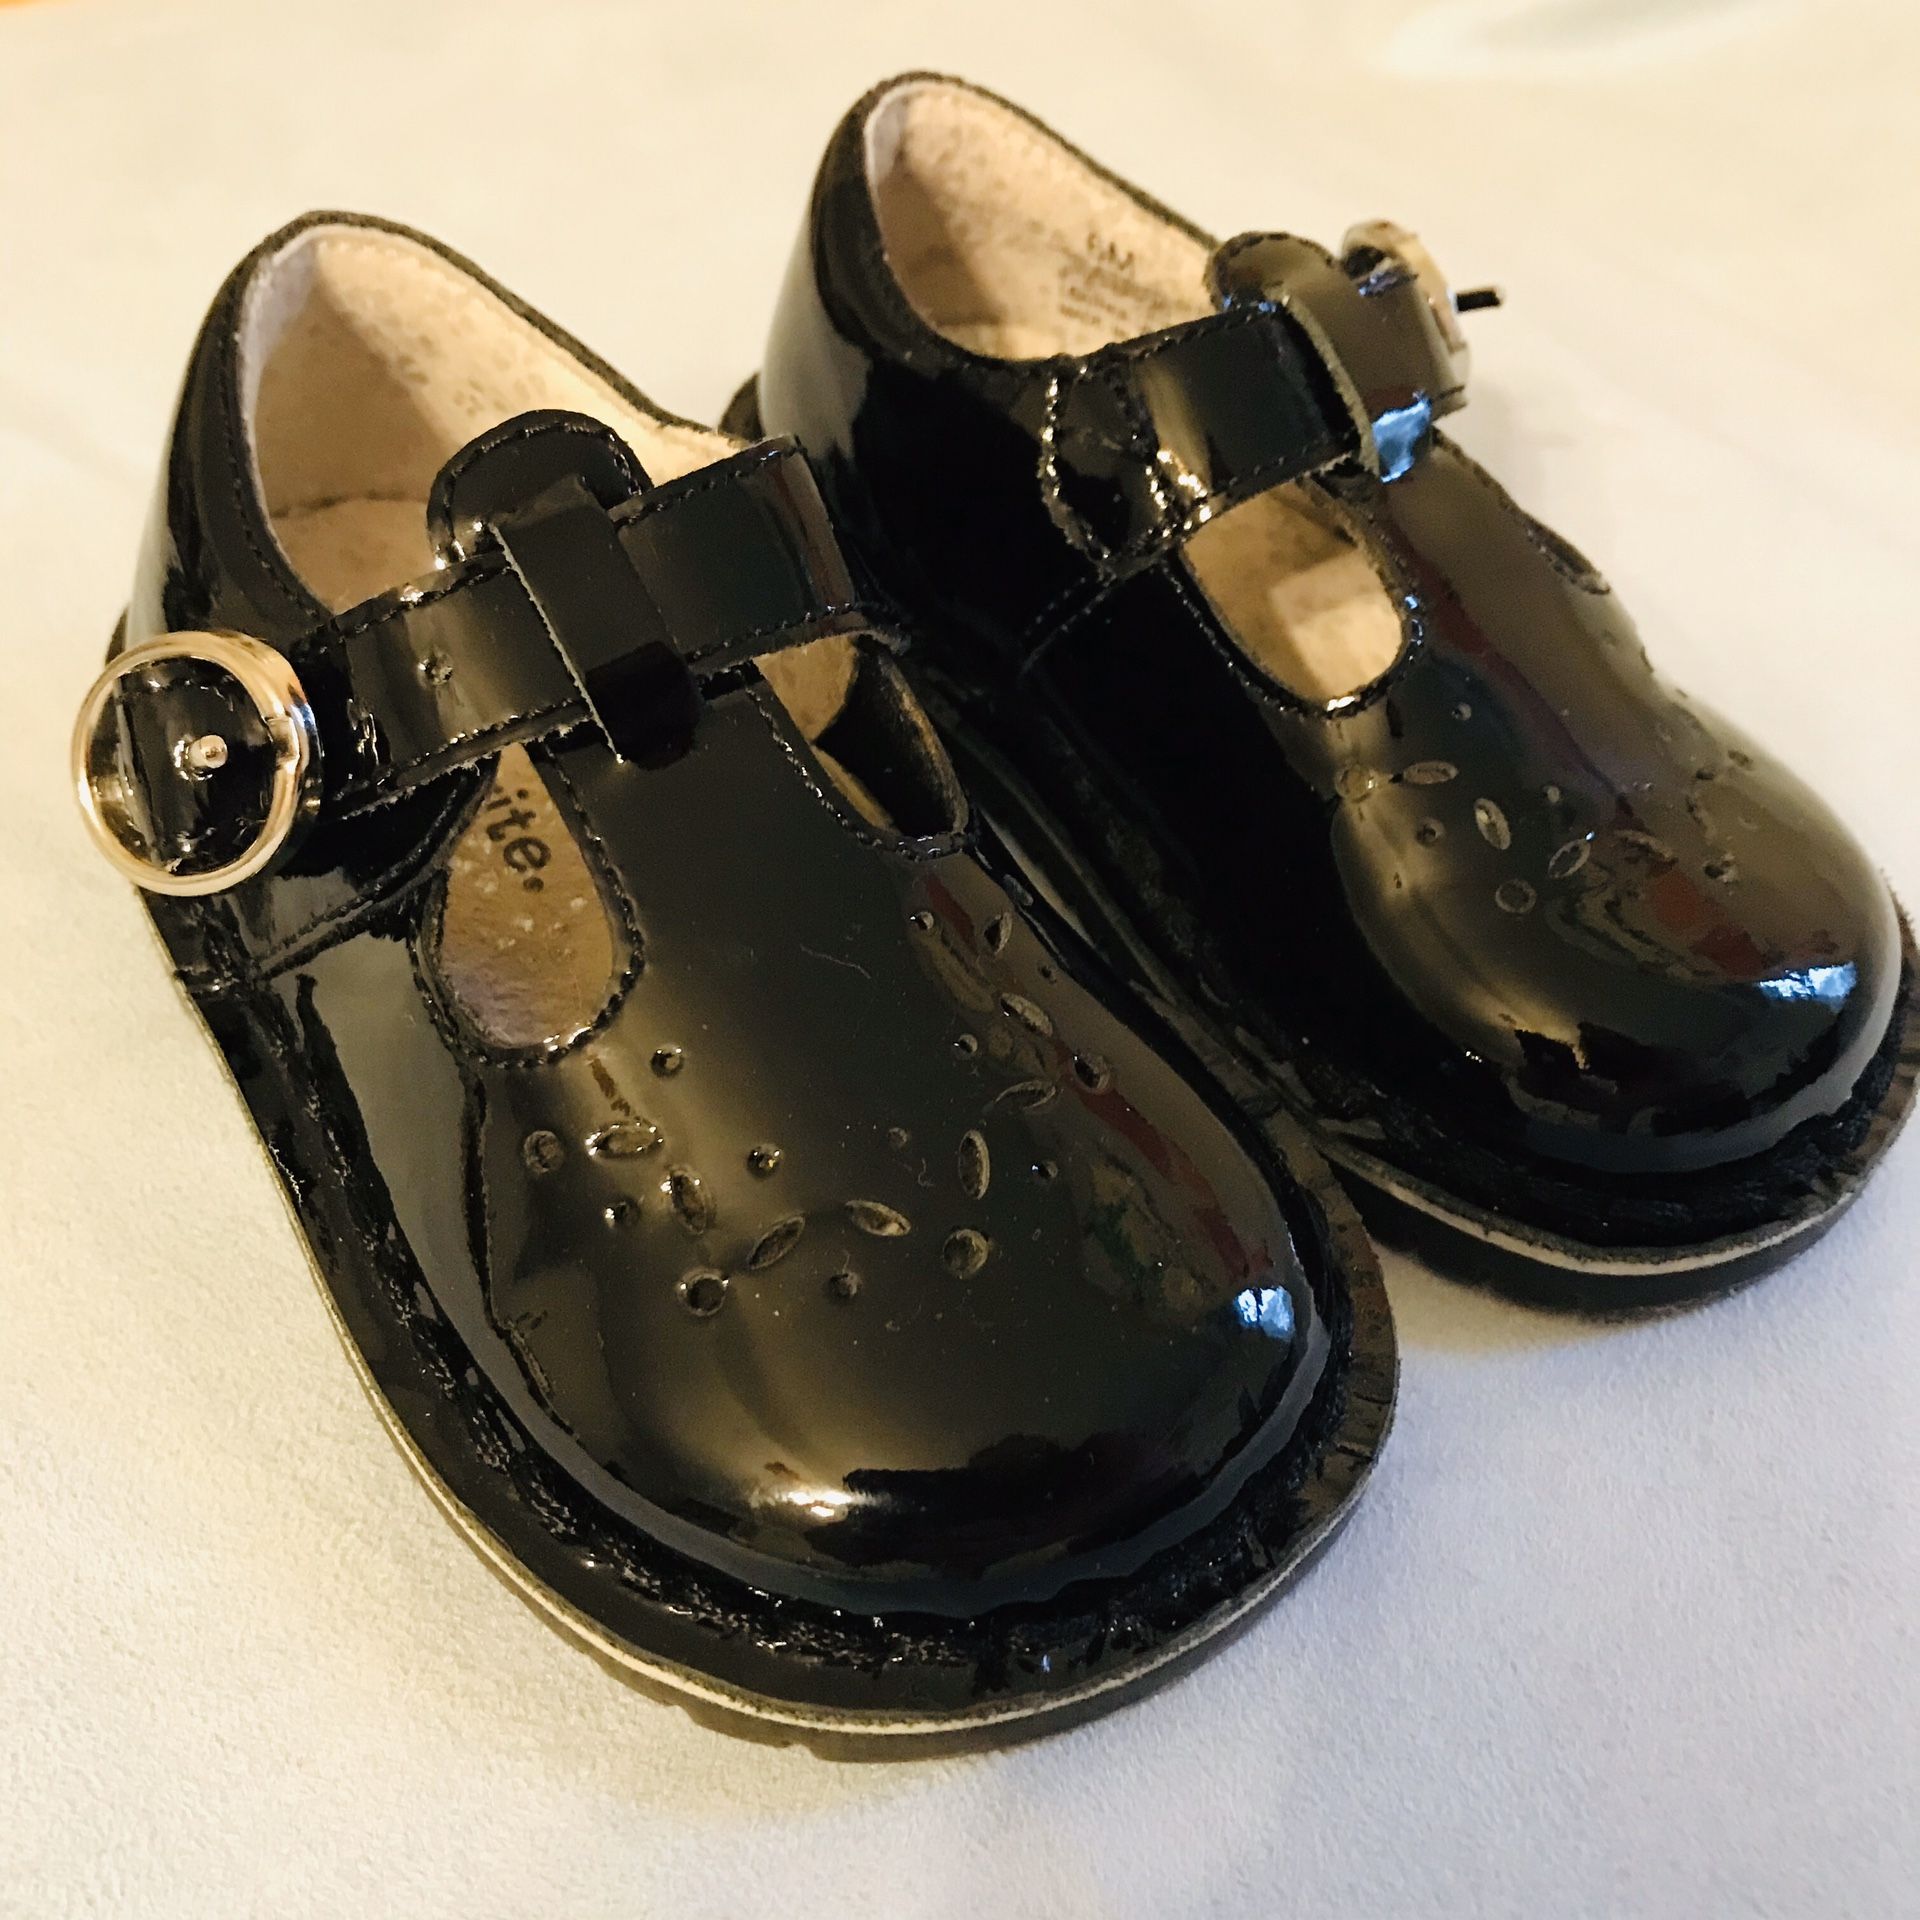 Stride Rite toddler size 6 black dress shoes